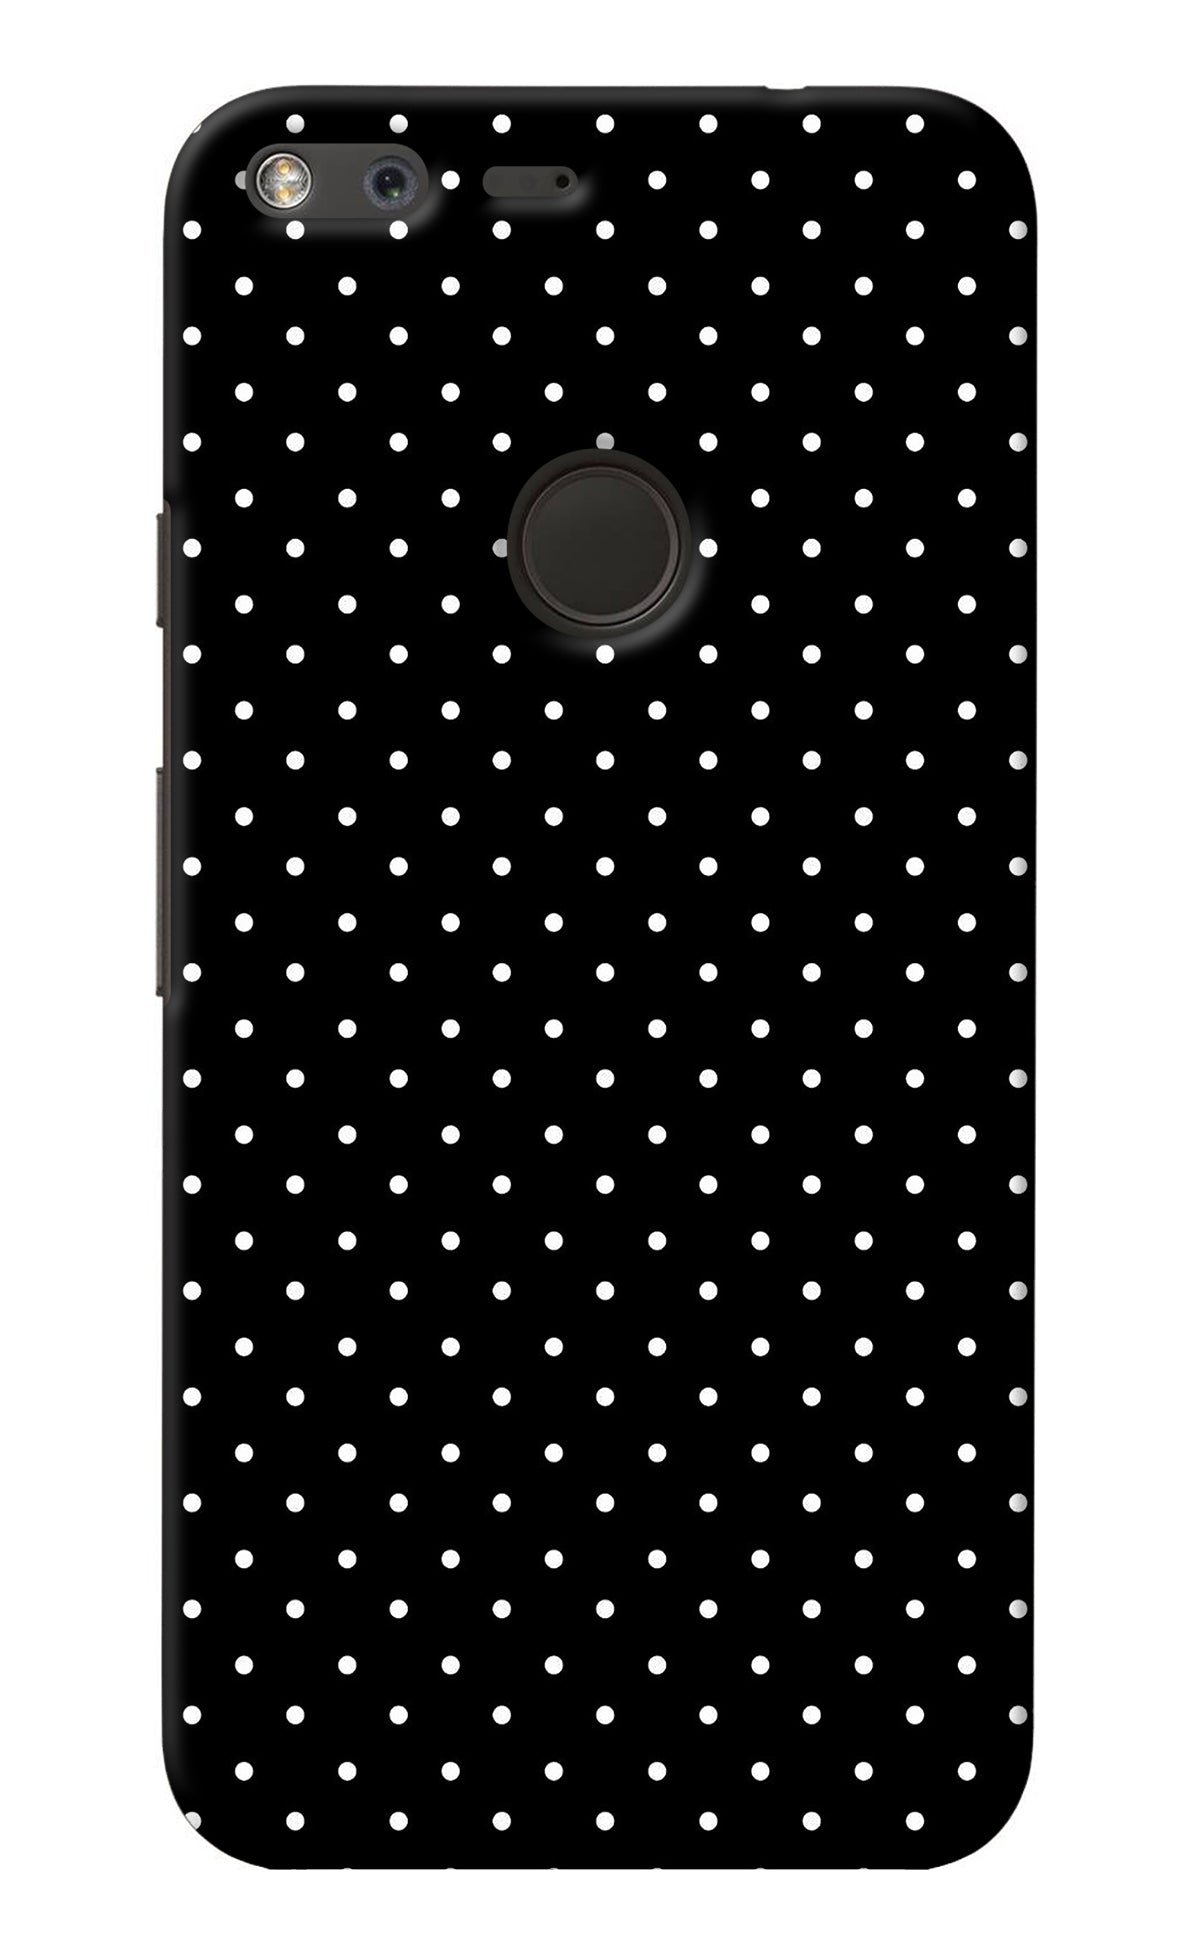 White Dots Google Pixel XL Back Cover